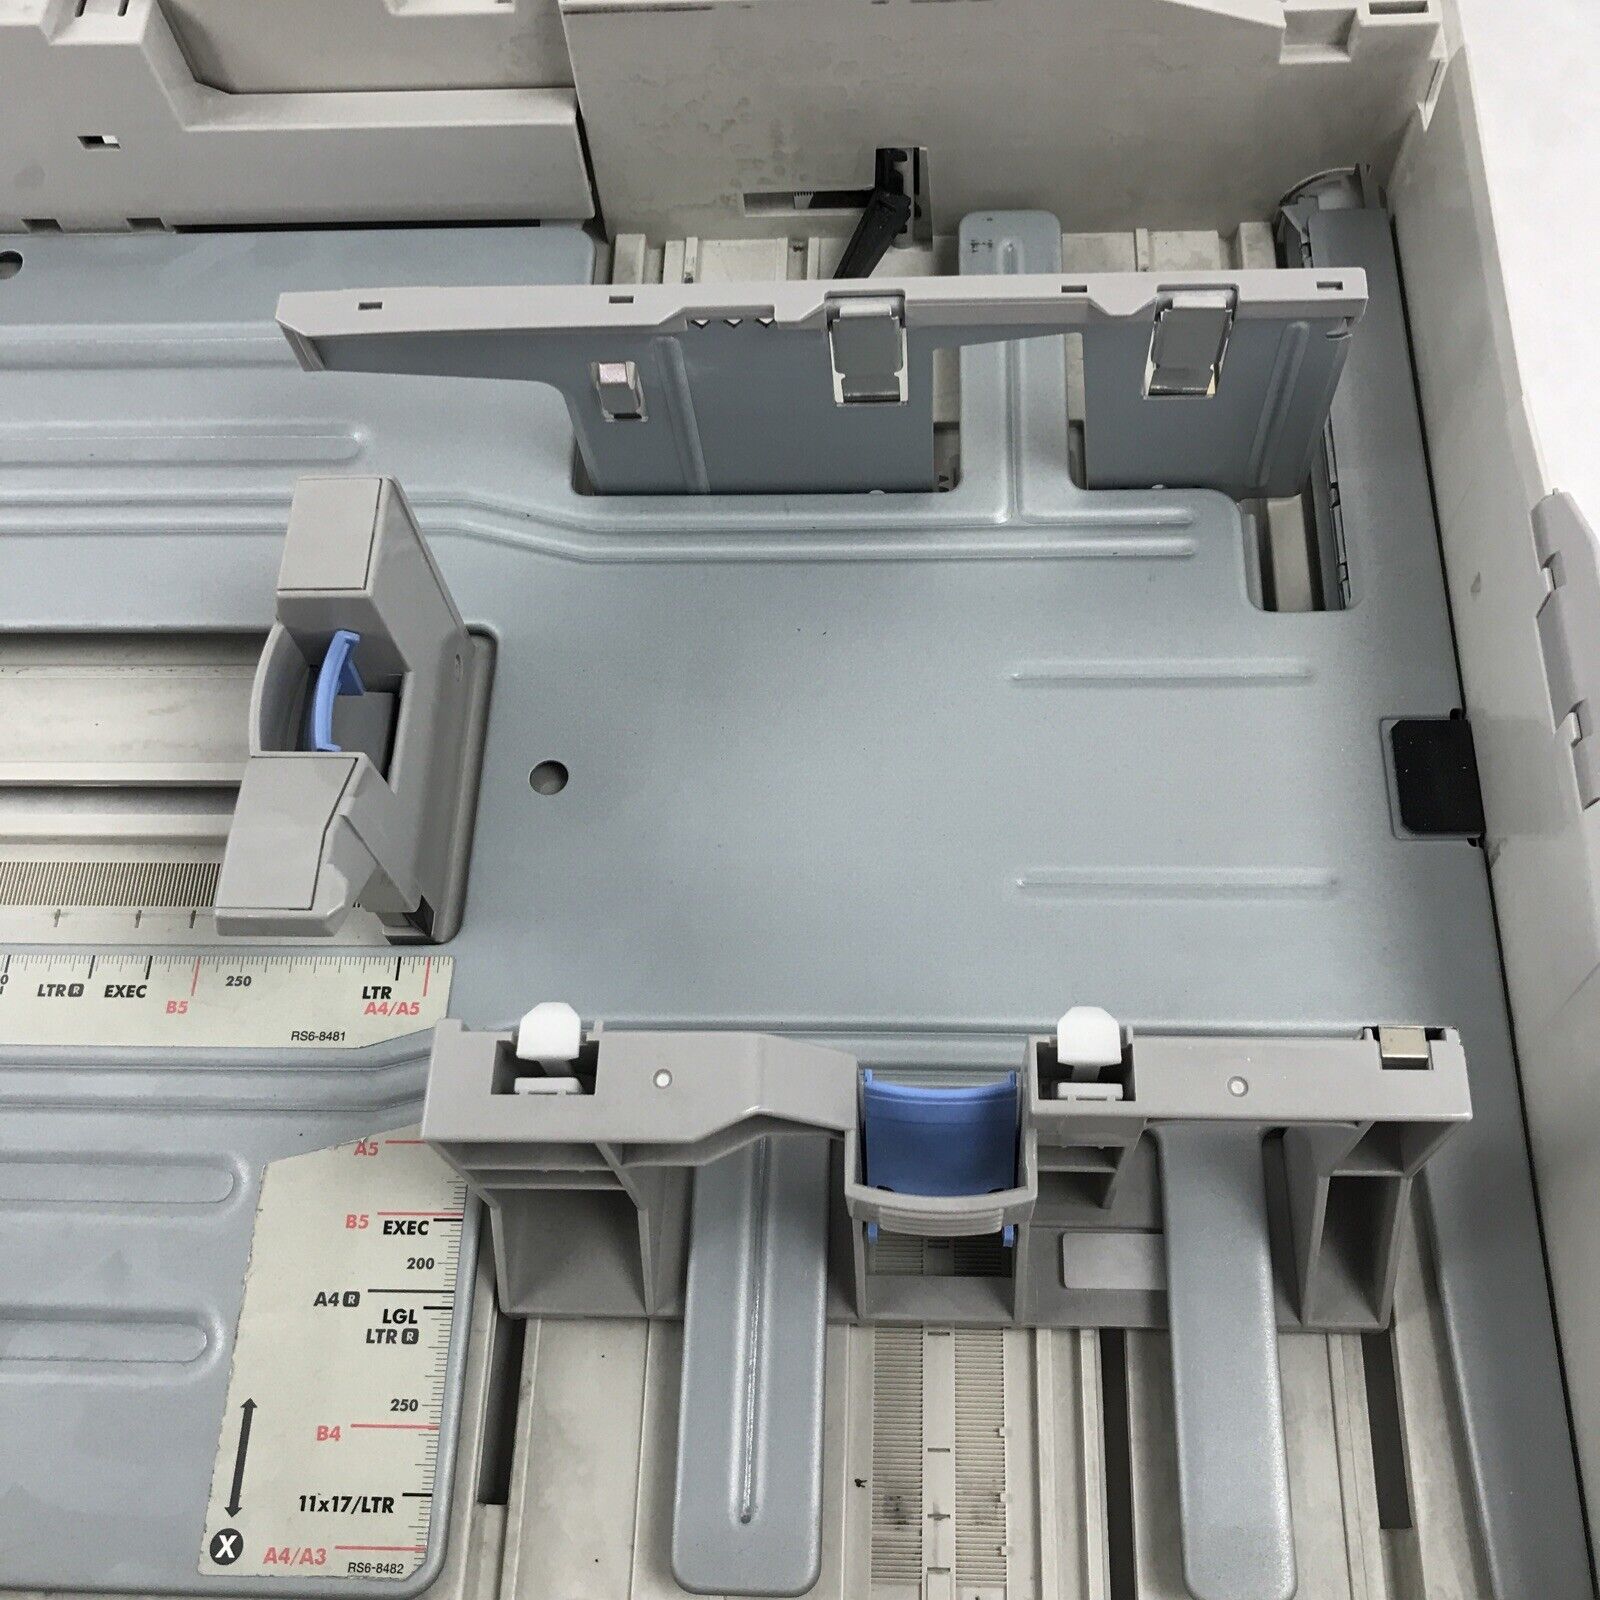 HP RB2-5771 Paper Cassette 500 Sheet Paper Feeder Tray for Laserjet 9000 Series